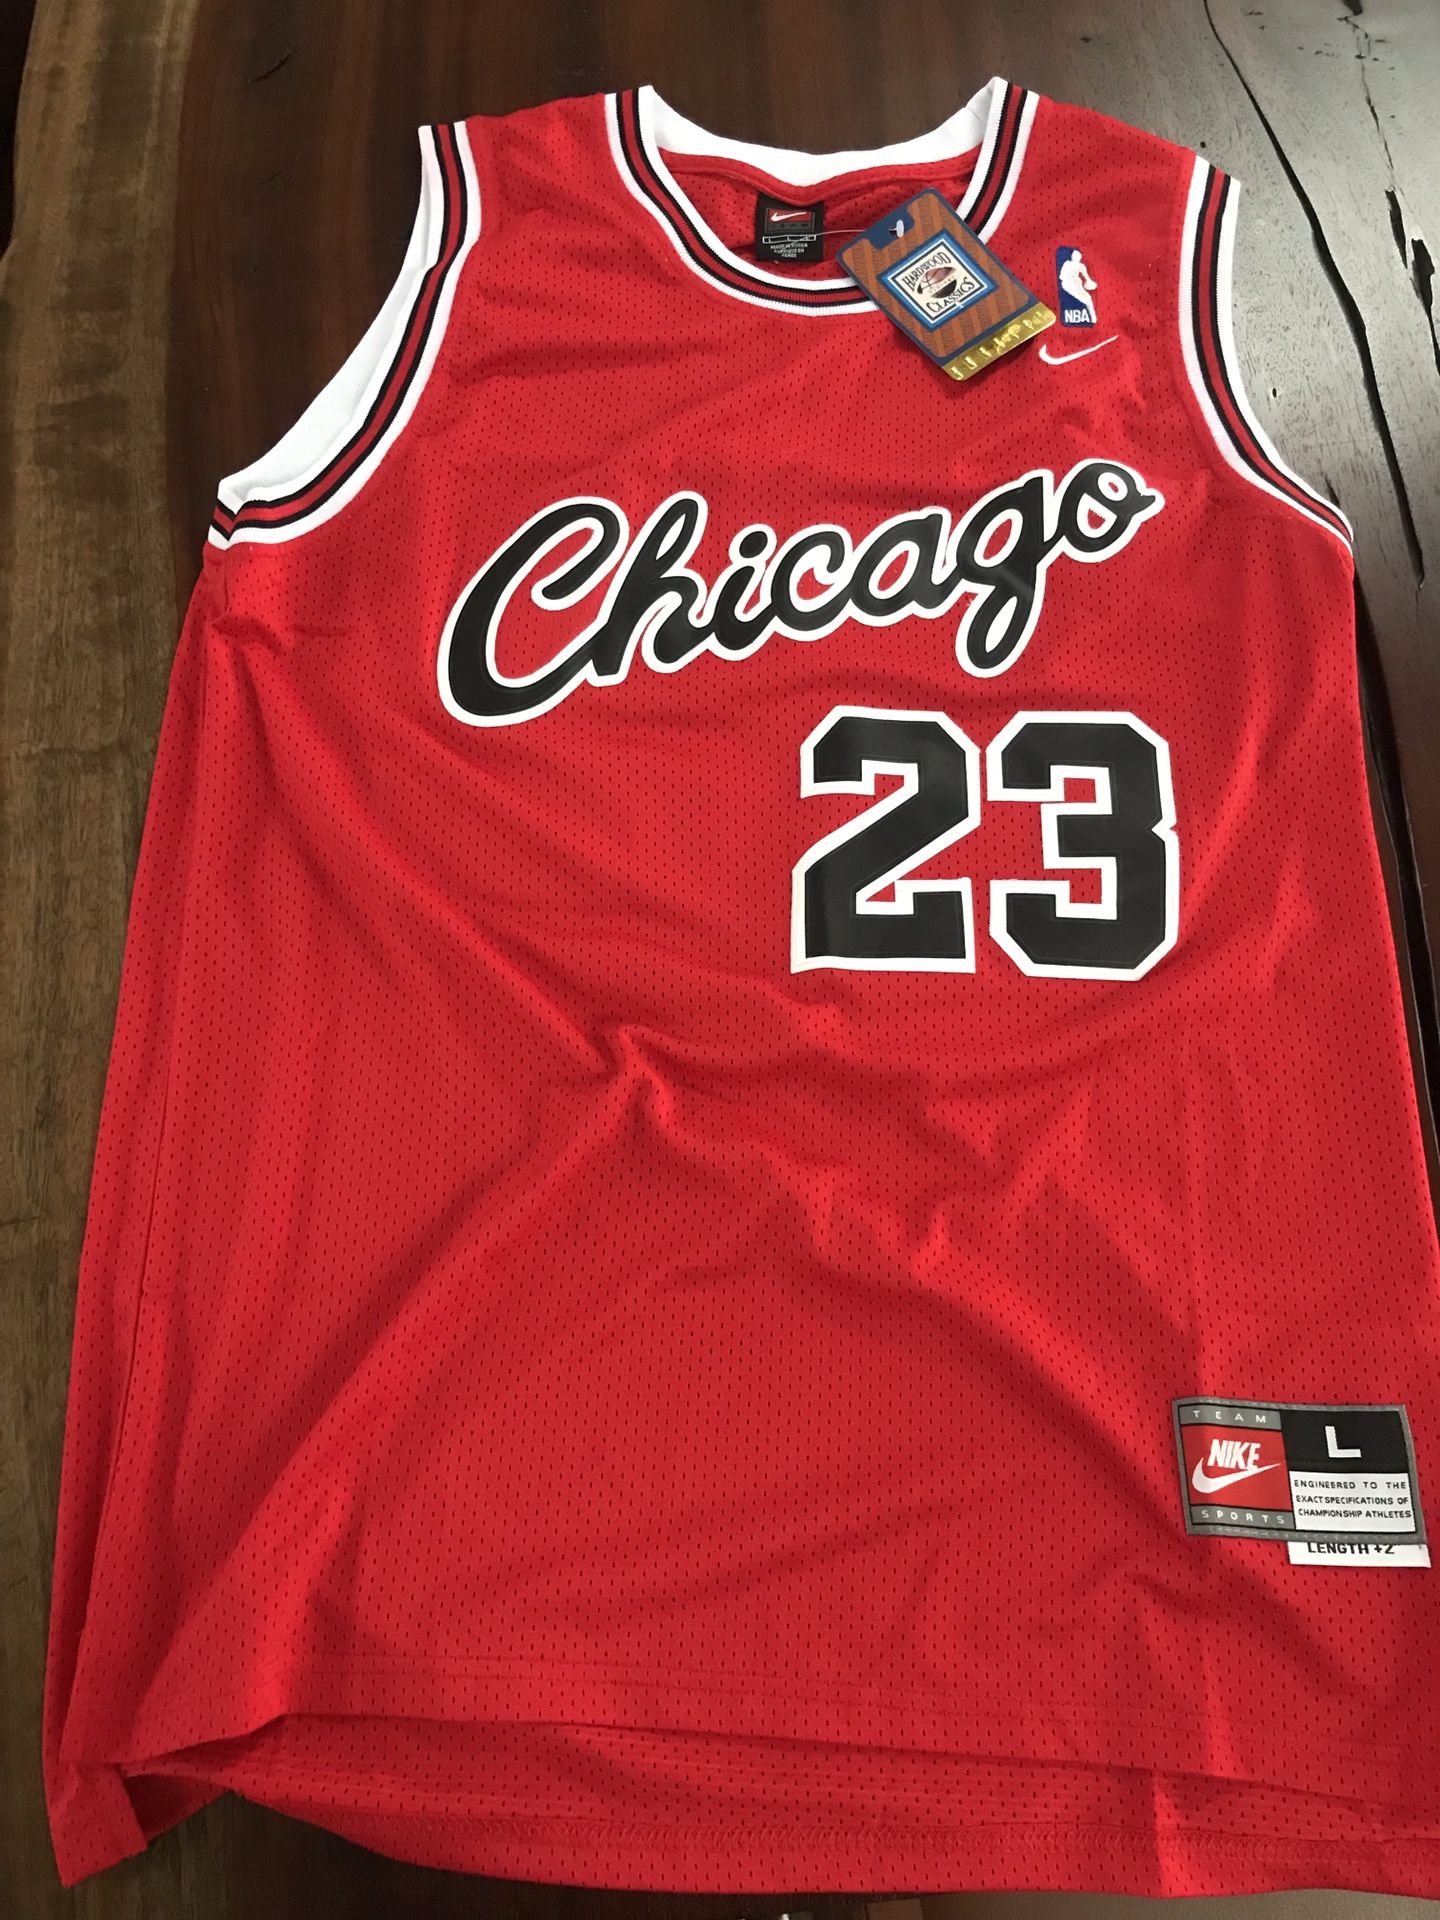 Michael Jordan 1984-85 jersey